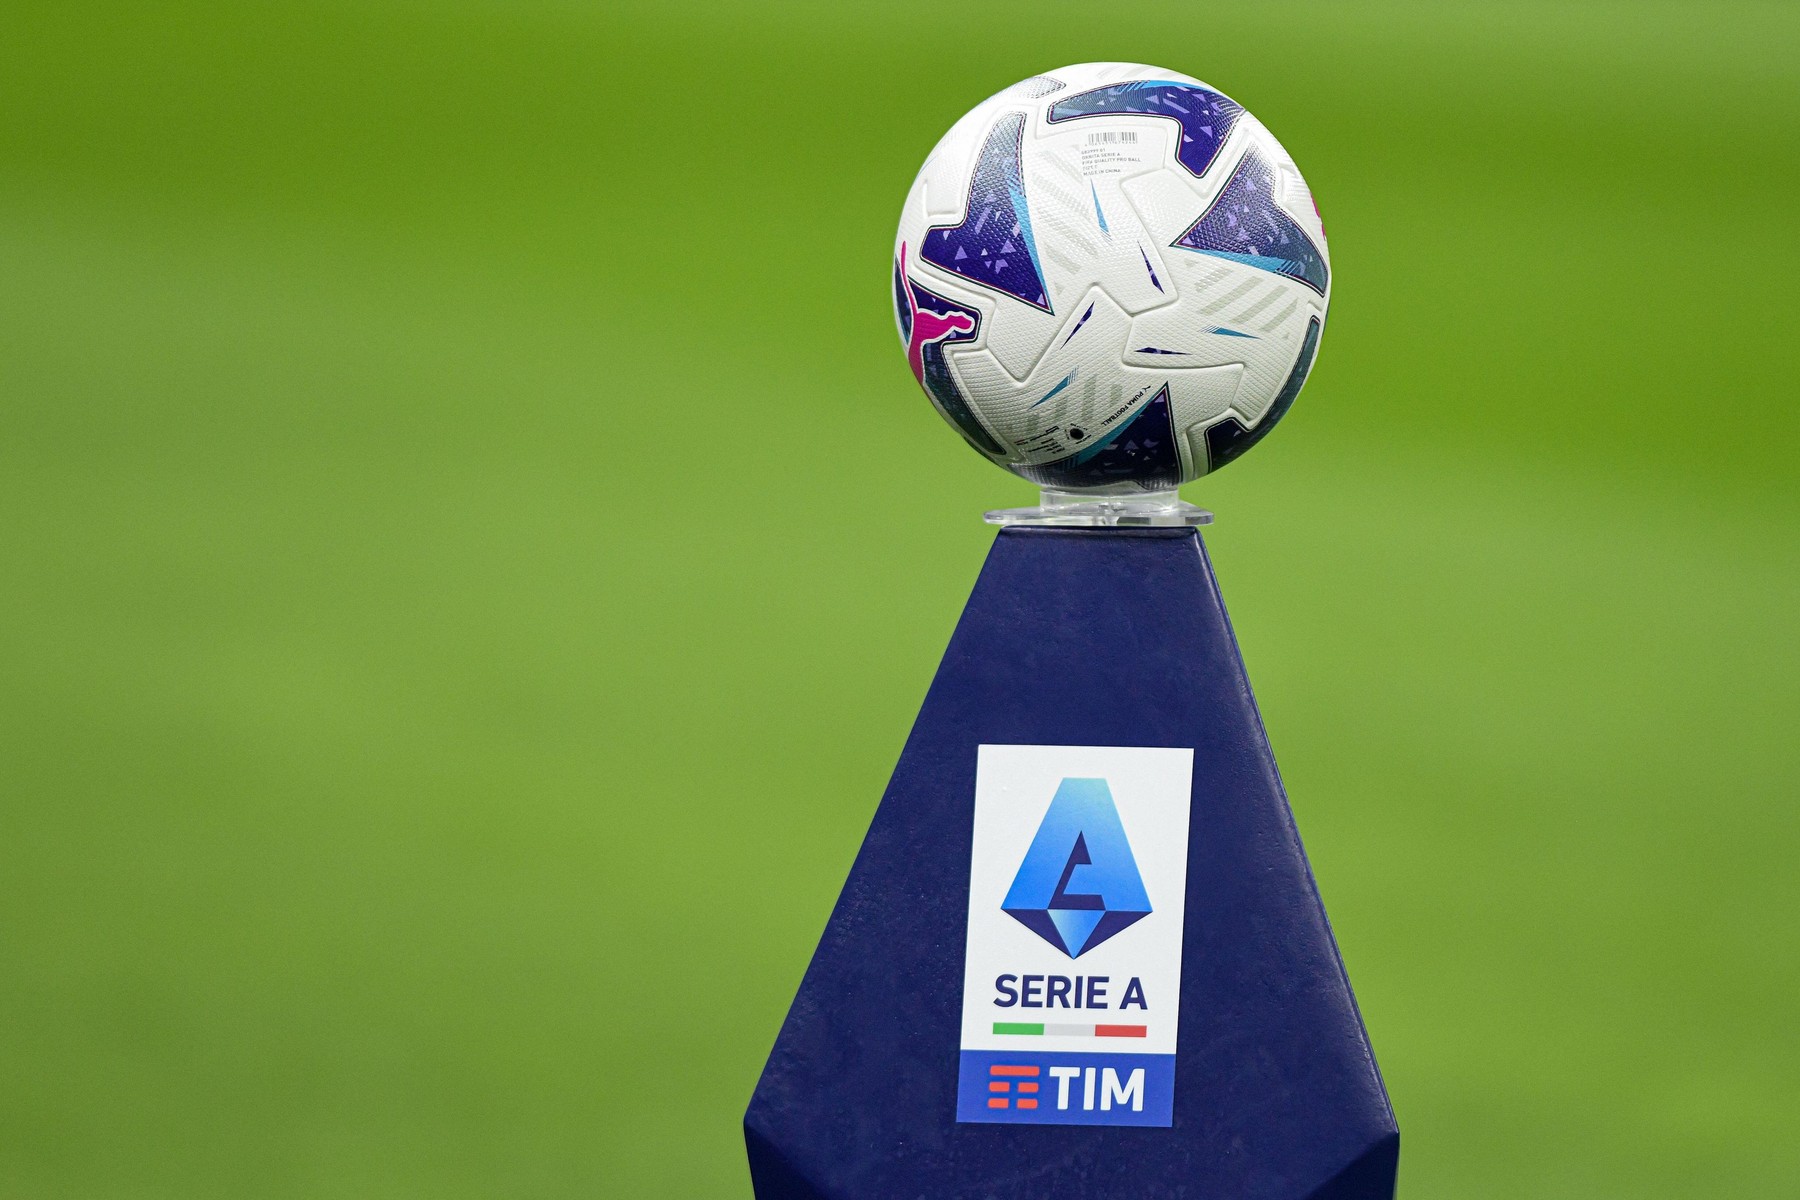 Juventus - Monza 2-0, ACUM pe Digi Sport 3 / AC Milan - Salernitana, LIVE VIDEO, 21:45, DGS 3